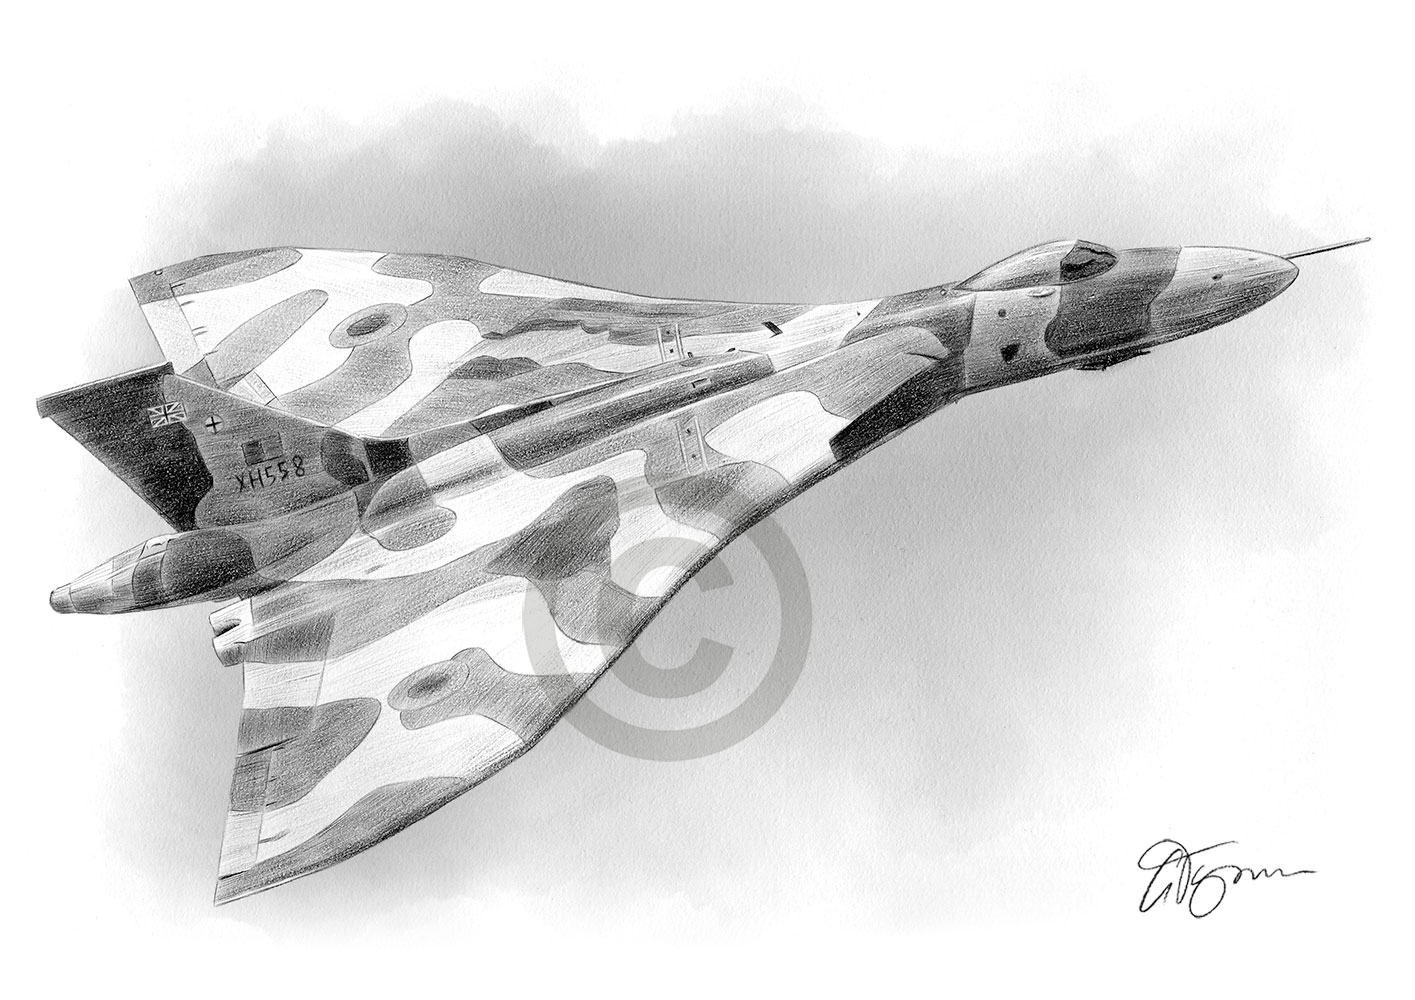 Pencil drawing of a Vulcan plane by artist Gary Tymon